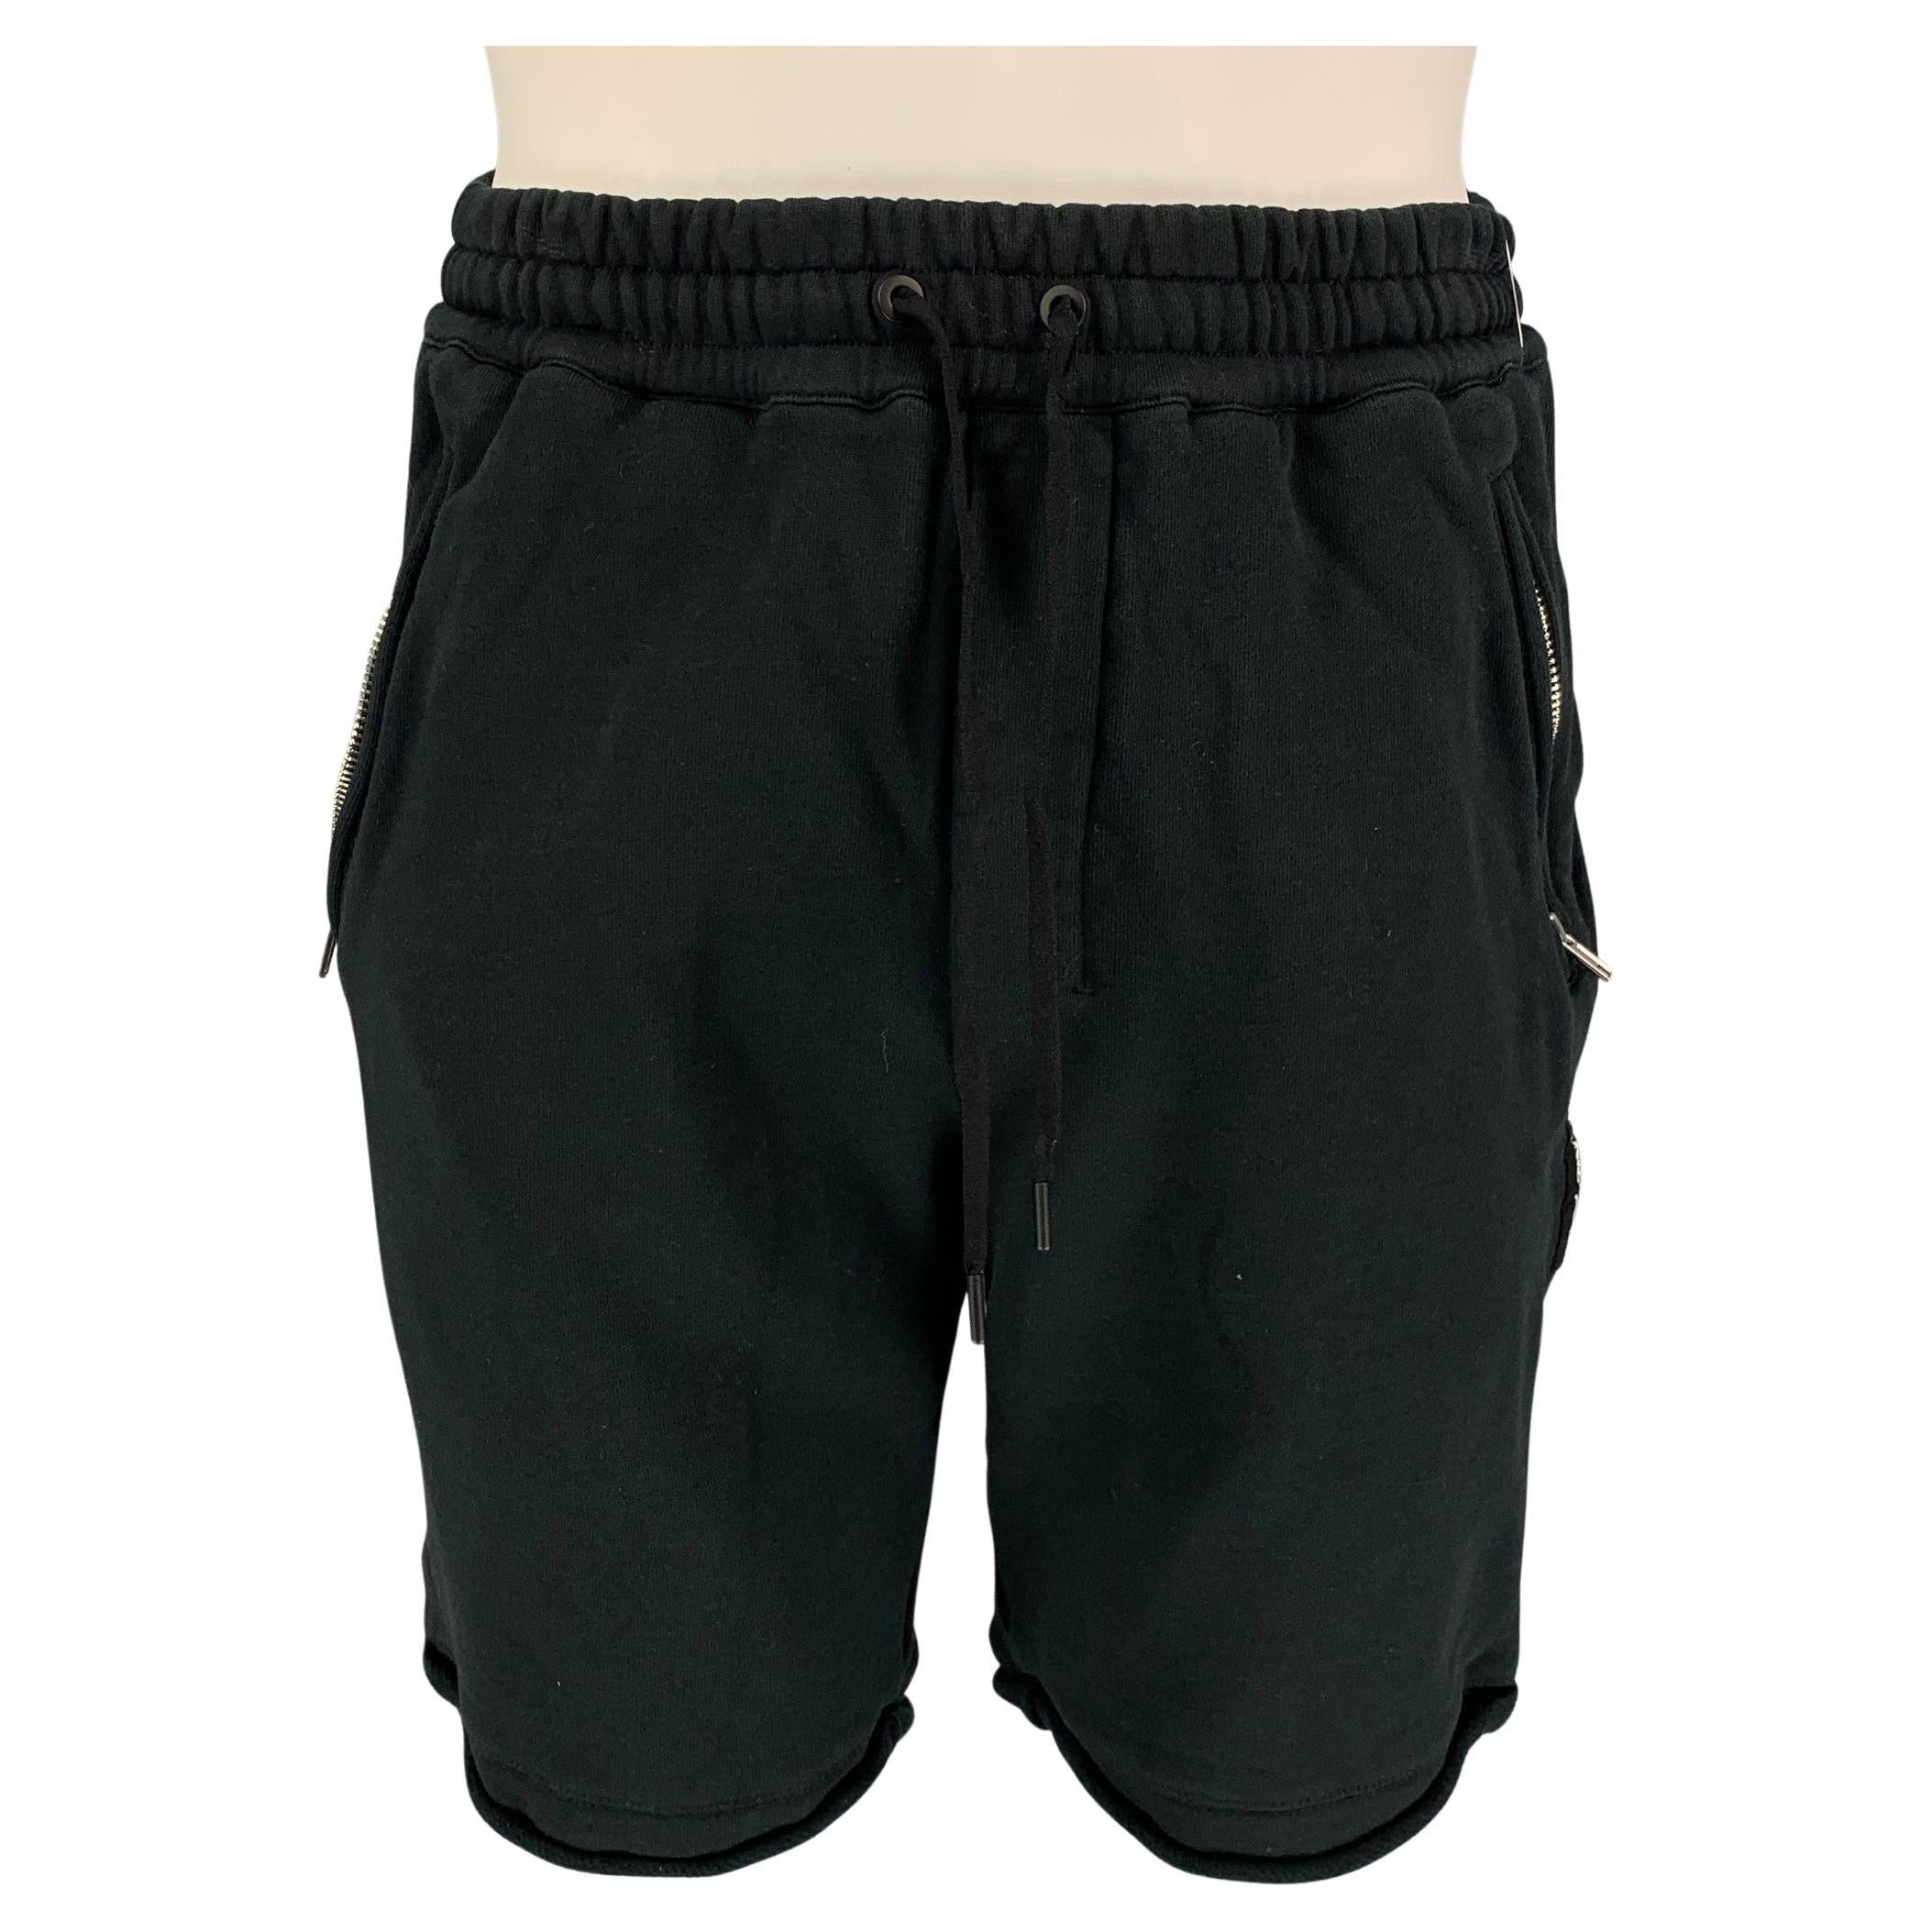 3.1 PHILLIP LIM Size S Black Cotton Drawstring Shorts